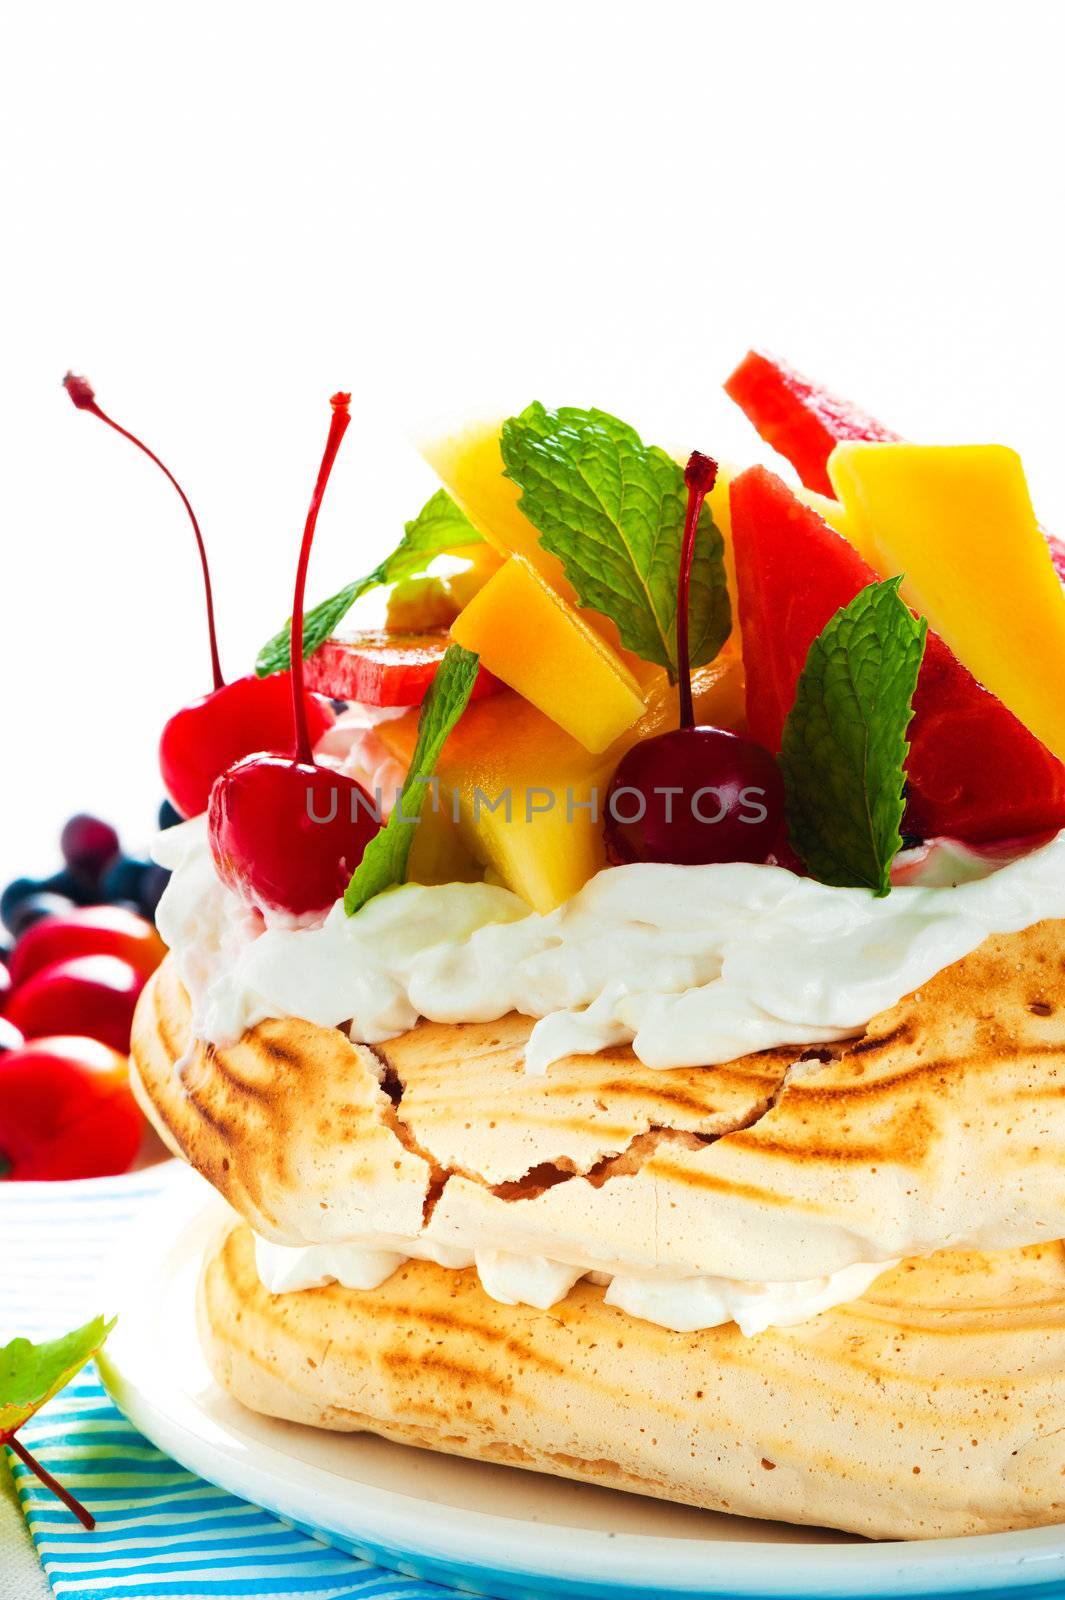 Pavlova with fresh fruit (mango, pineapple, watermelon, cherry) ready  to serve, on white background as a studio shot